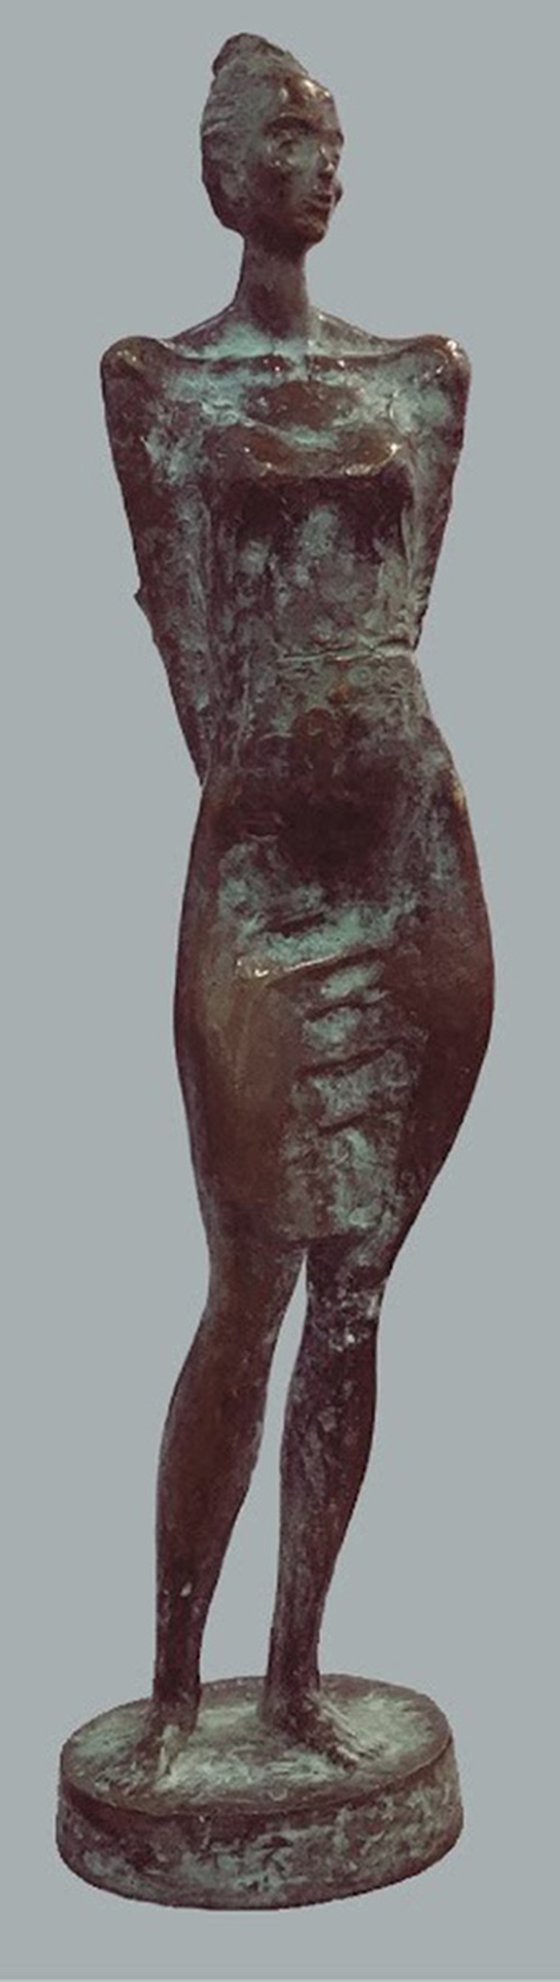 Sima(35x10x10cm, bronze)